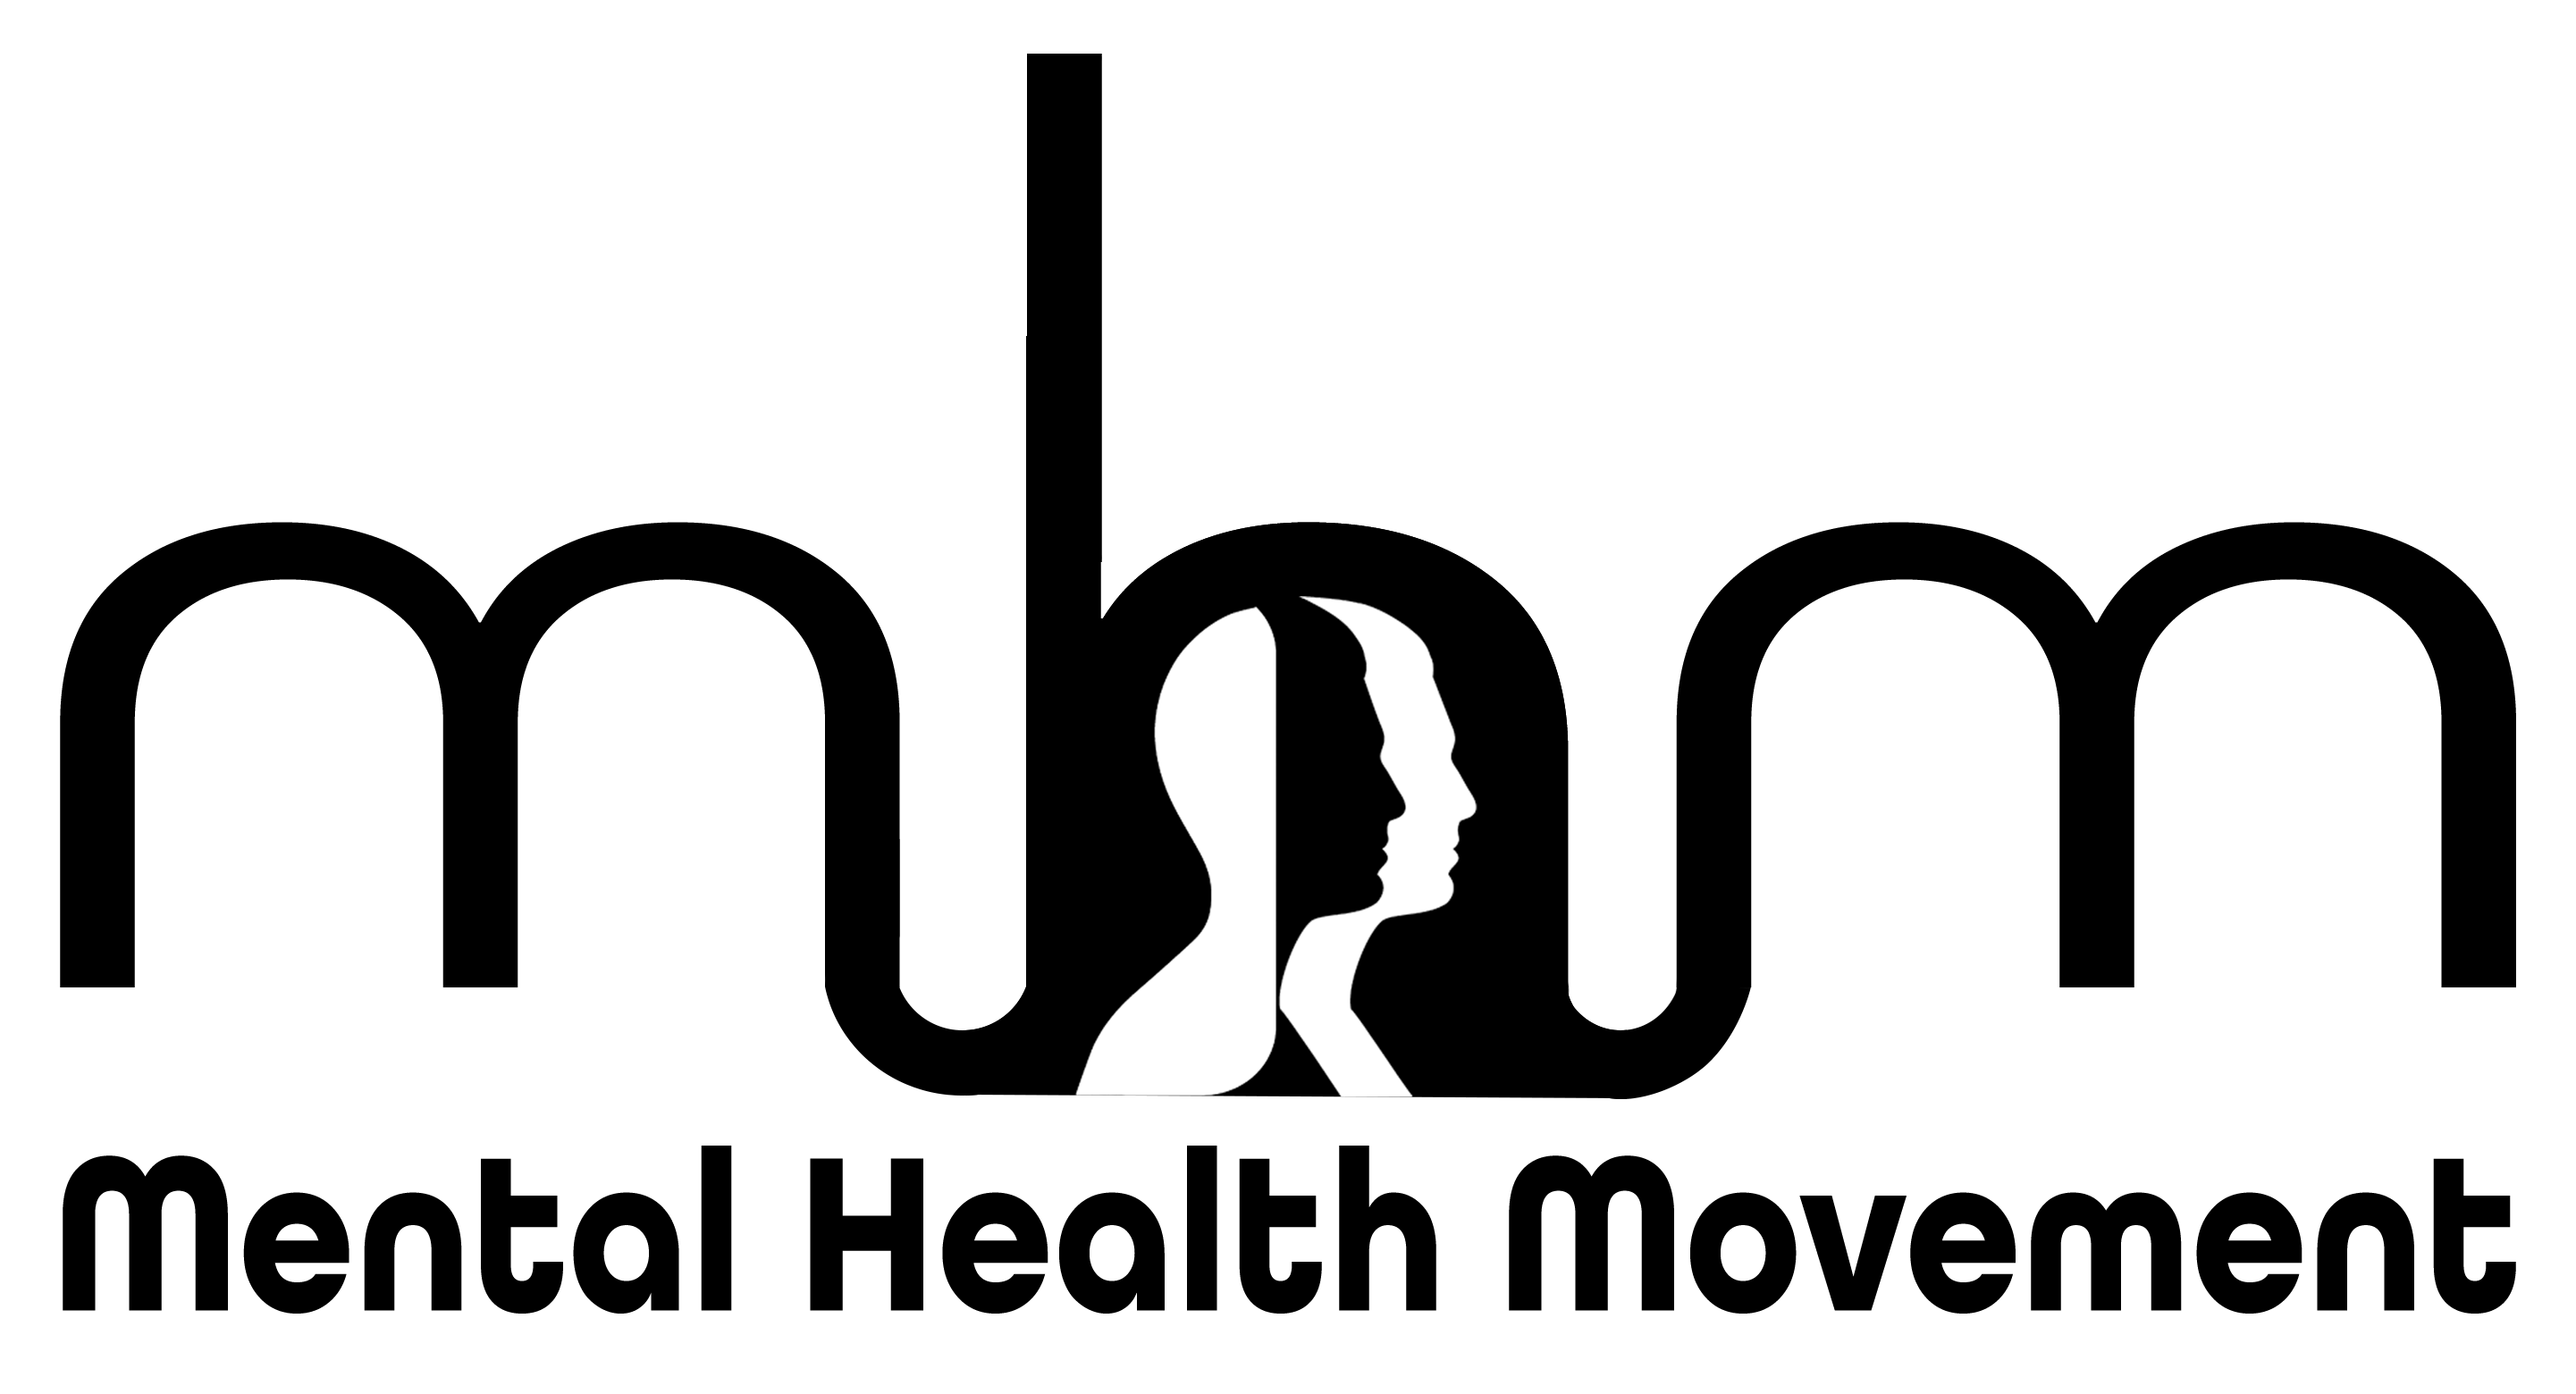 The Mental Health Movement